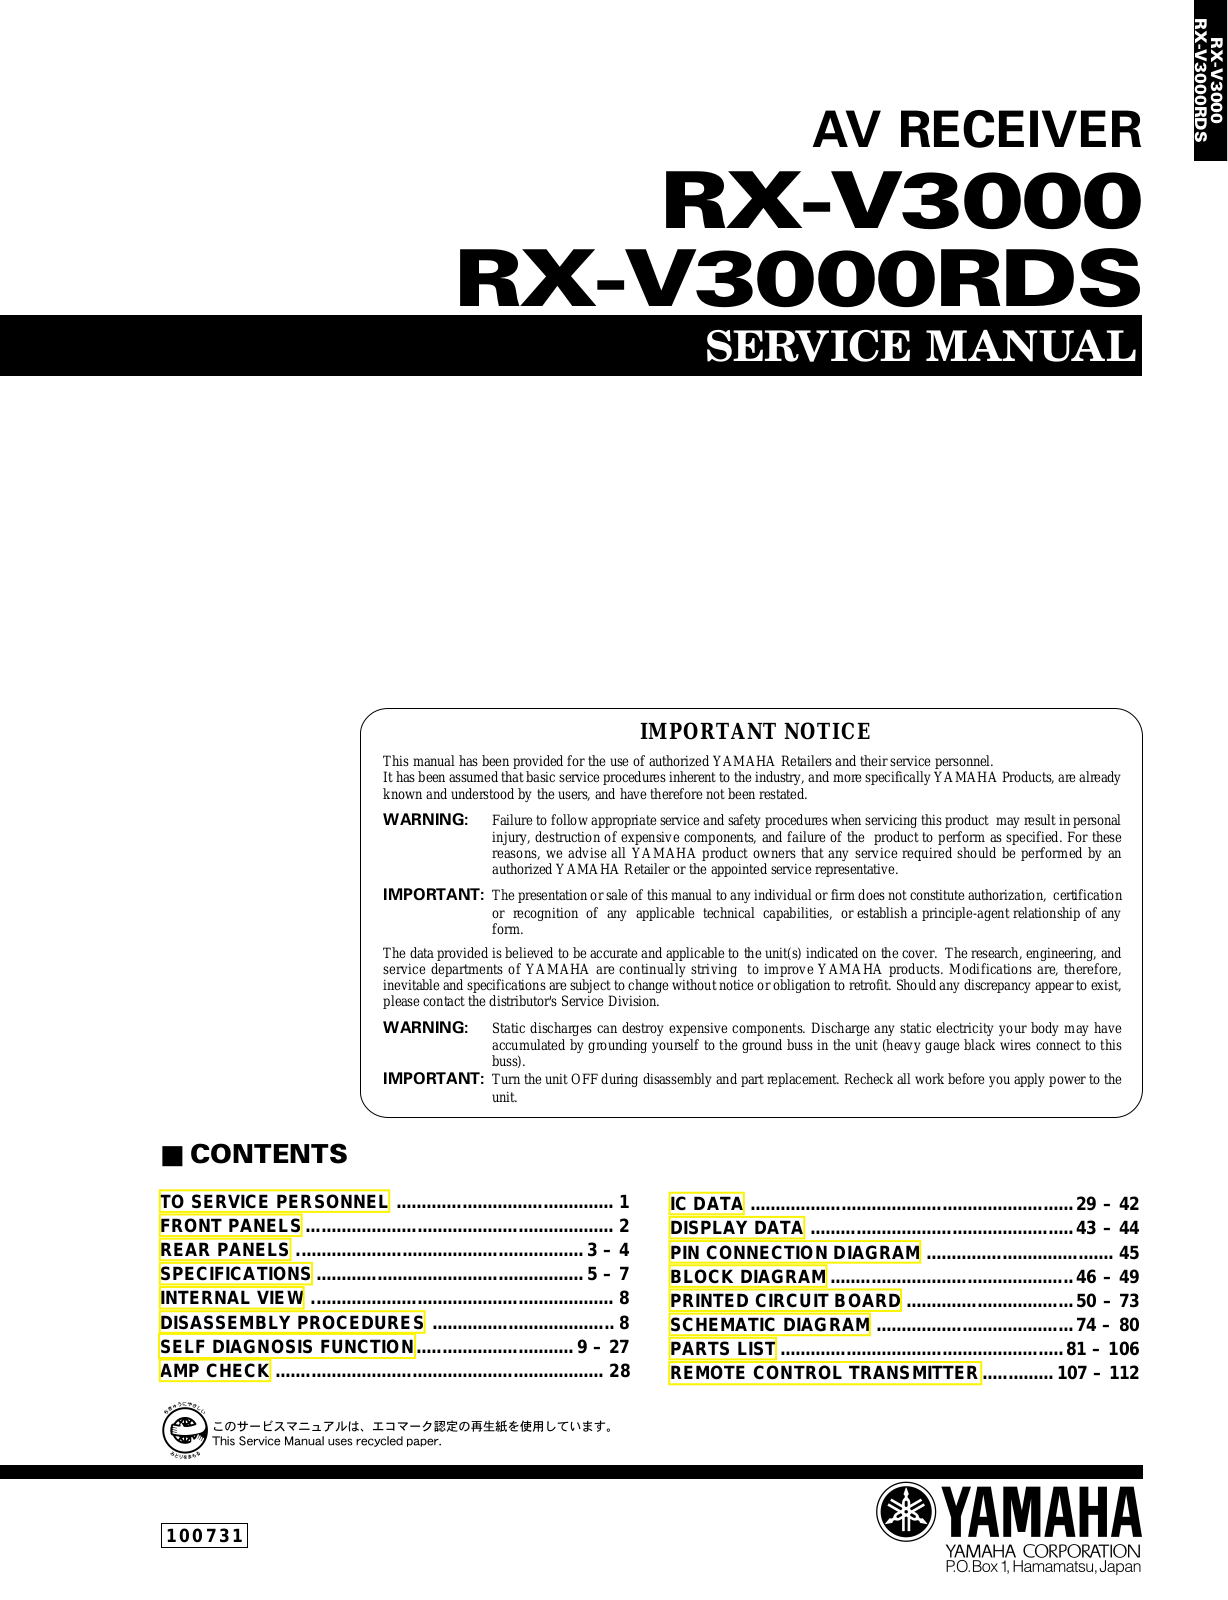 Yamaha RXV-3000 Service manual